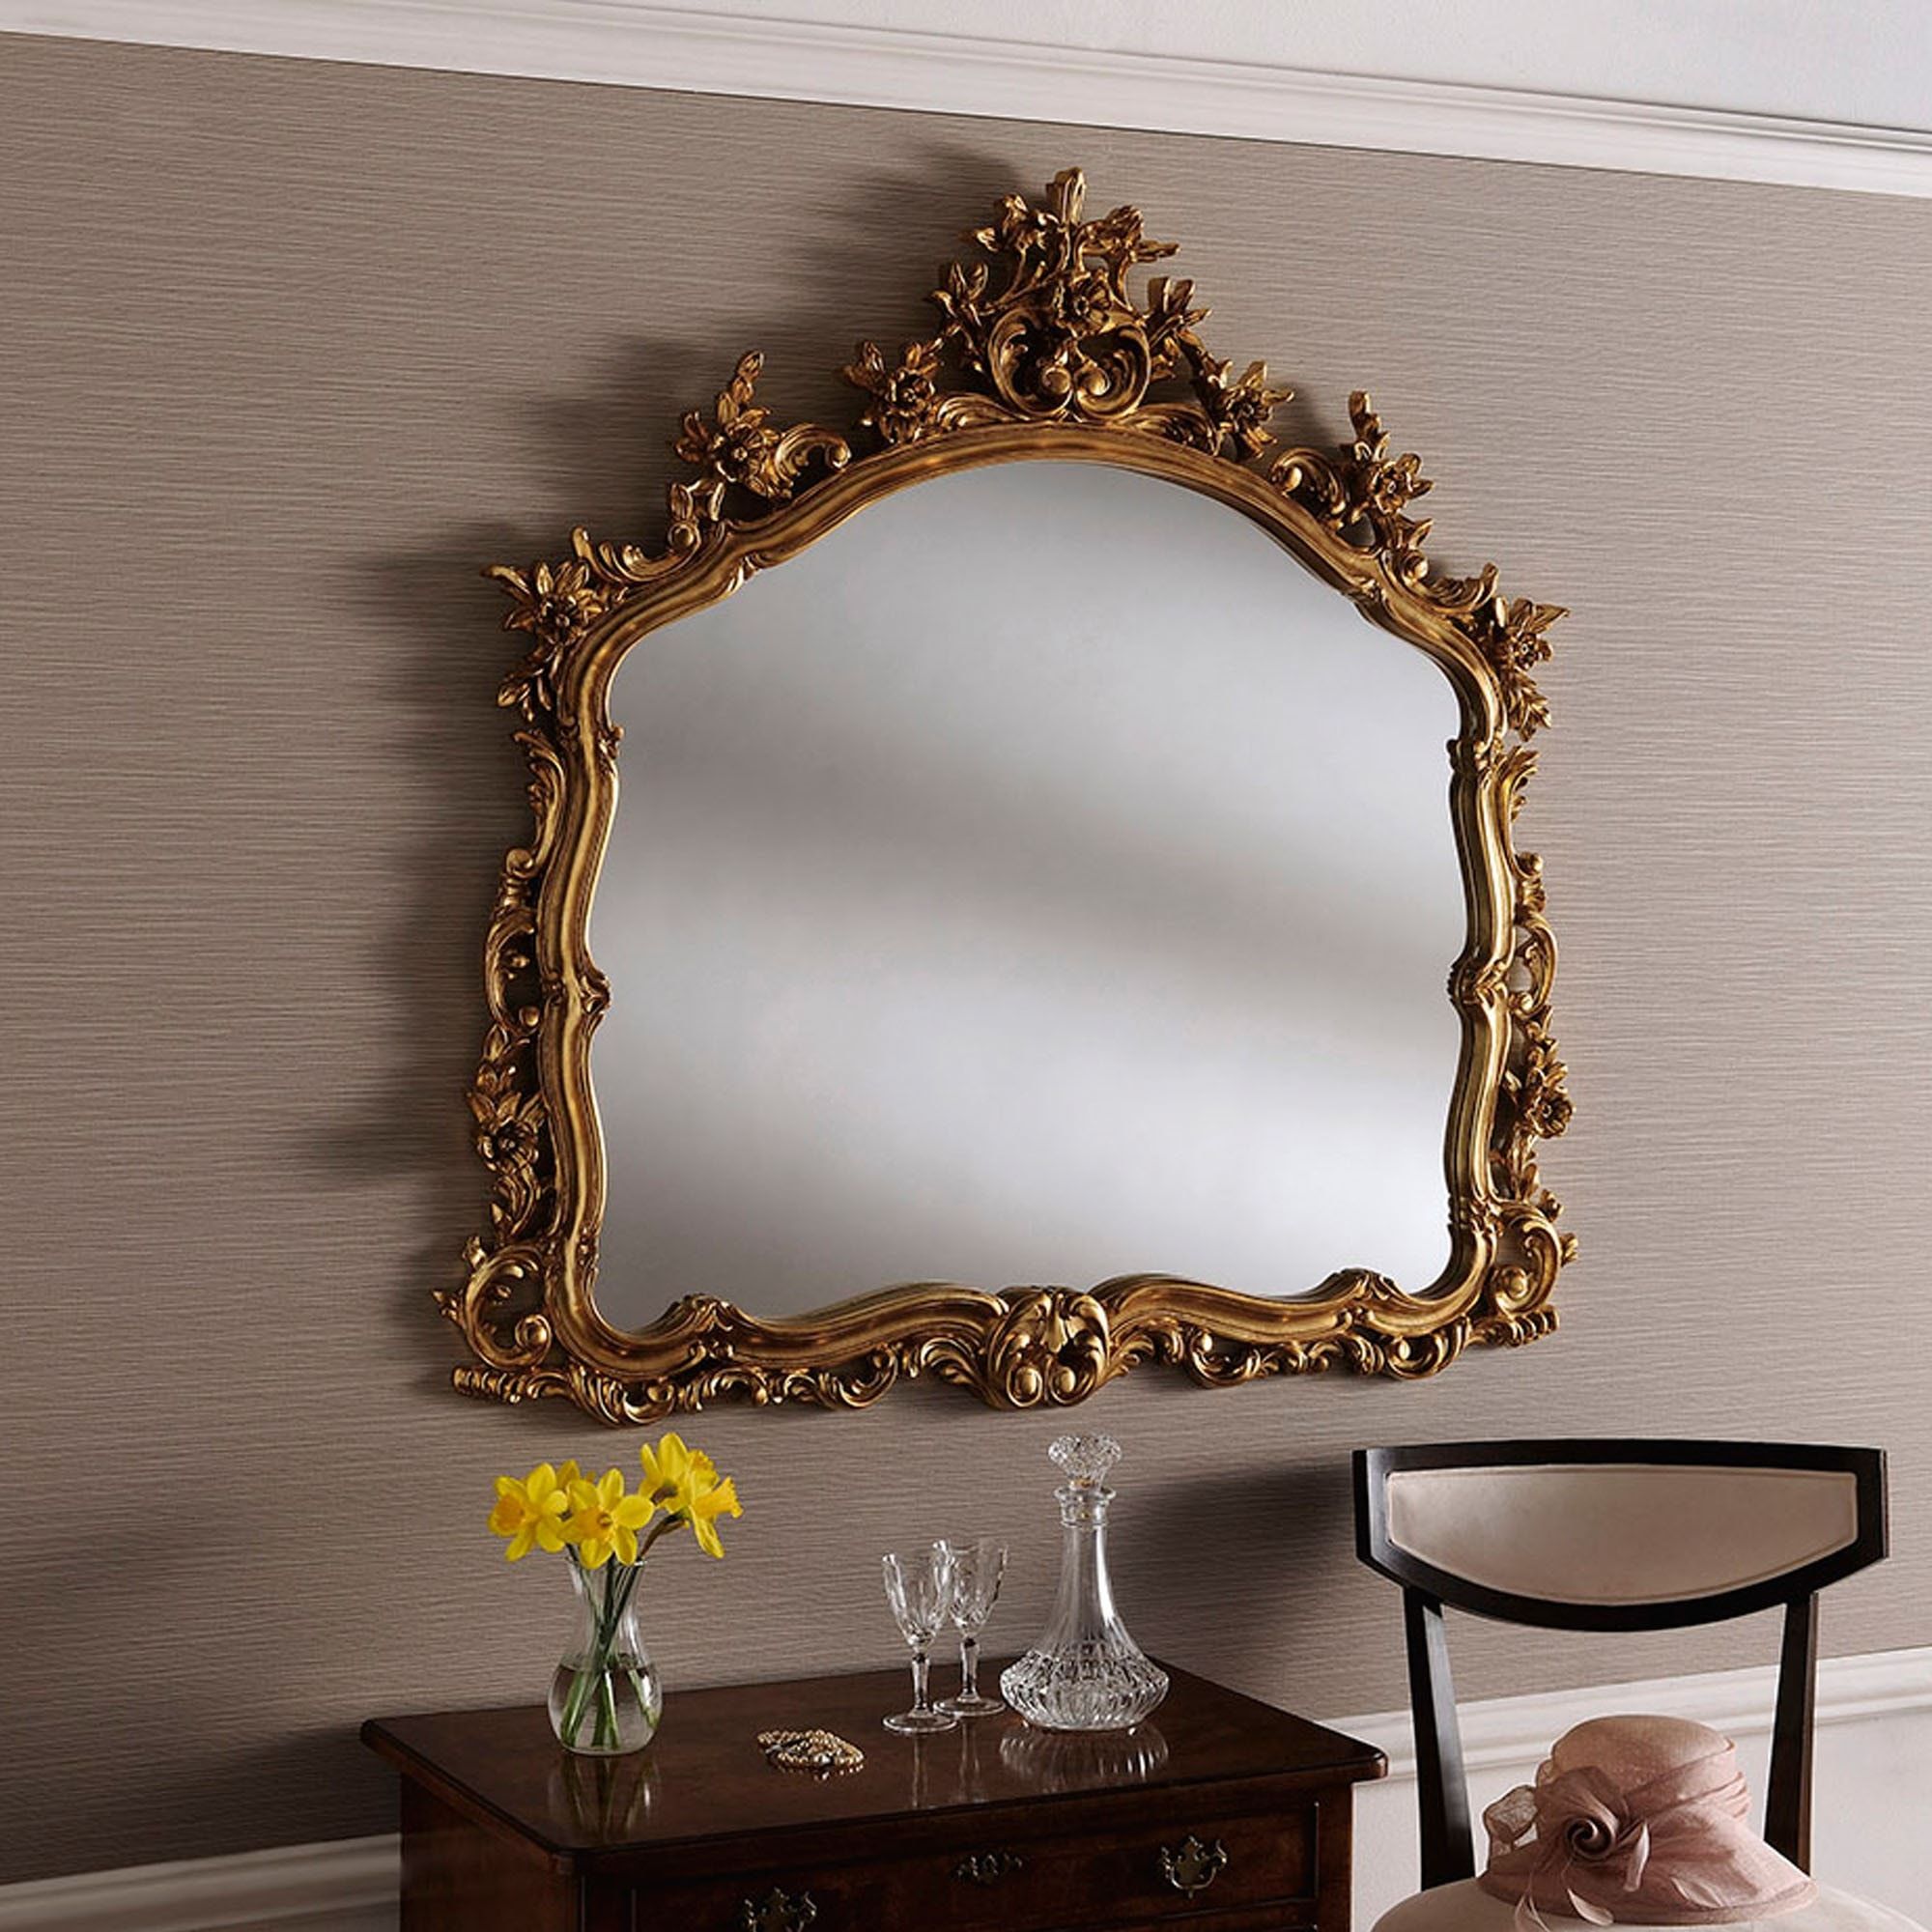 Decorative Gold Ornate Wall Mirror | Decorative Gold Mirror With Regard To Gold Decorative Wall Mirrors (Photo 9 of 15)